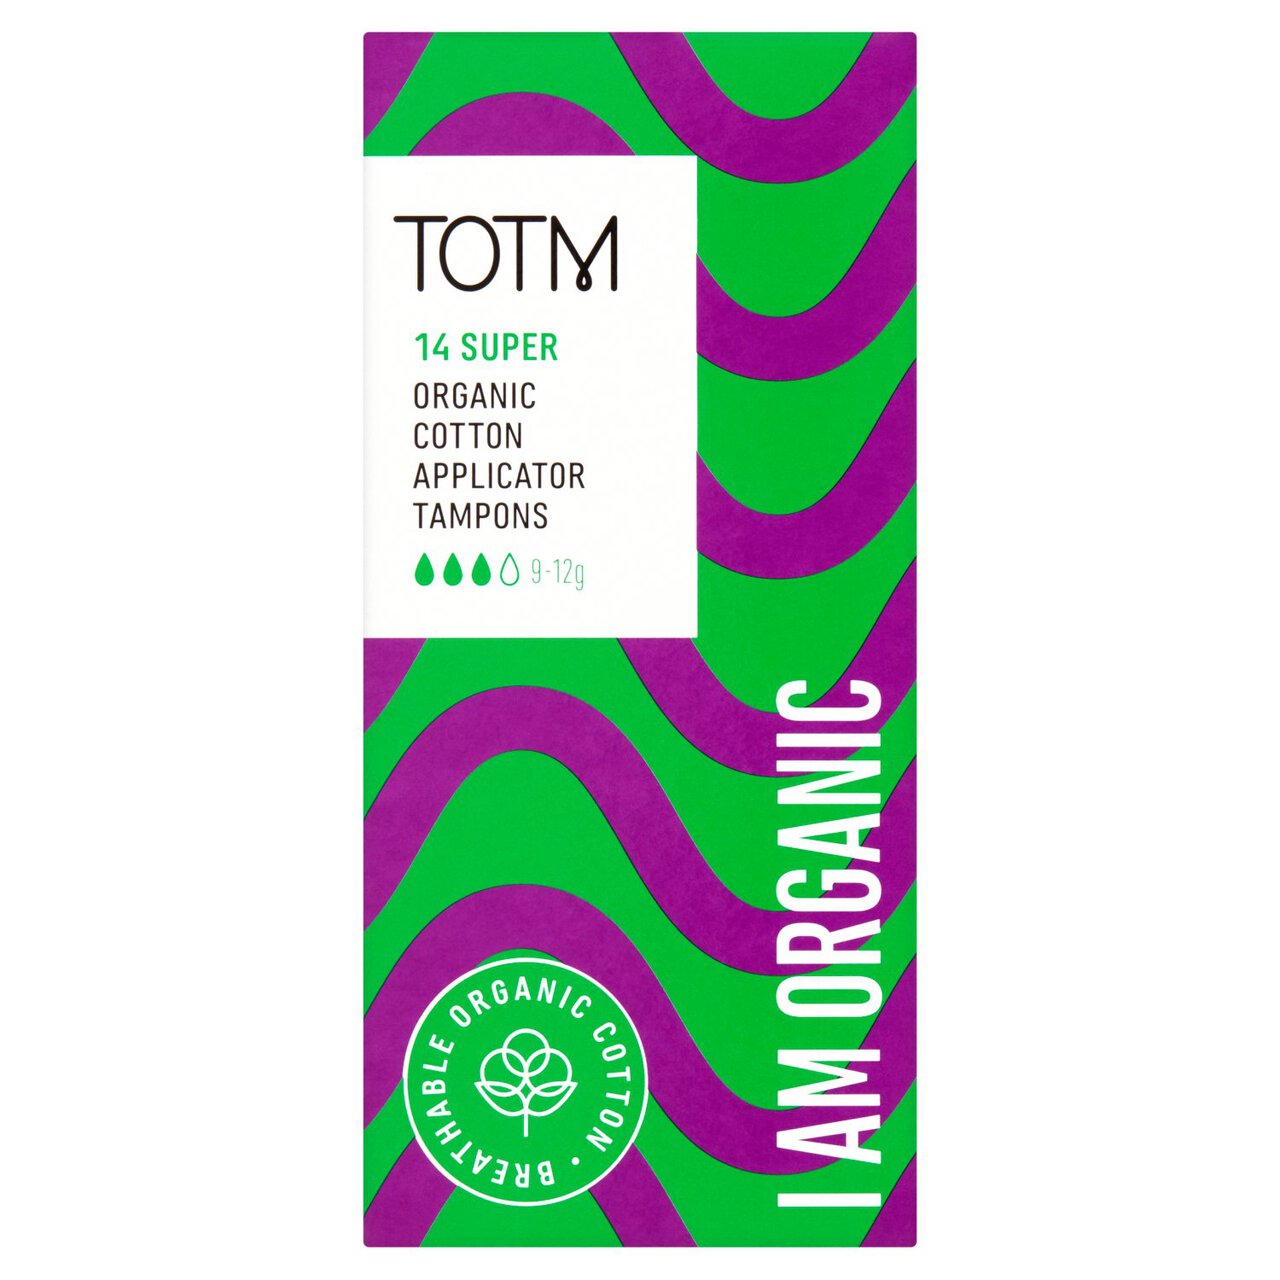 TOTM Organic Cotton Applicator Tampons Super 14 per pack